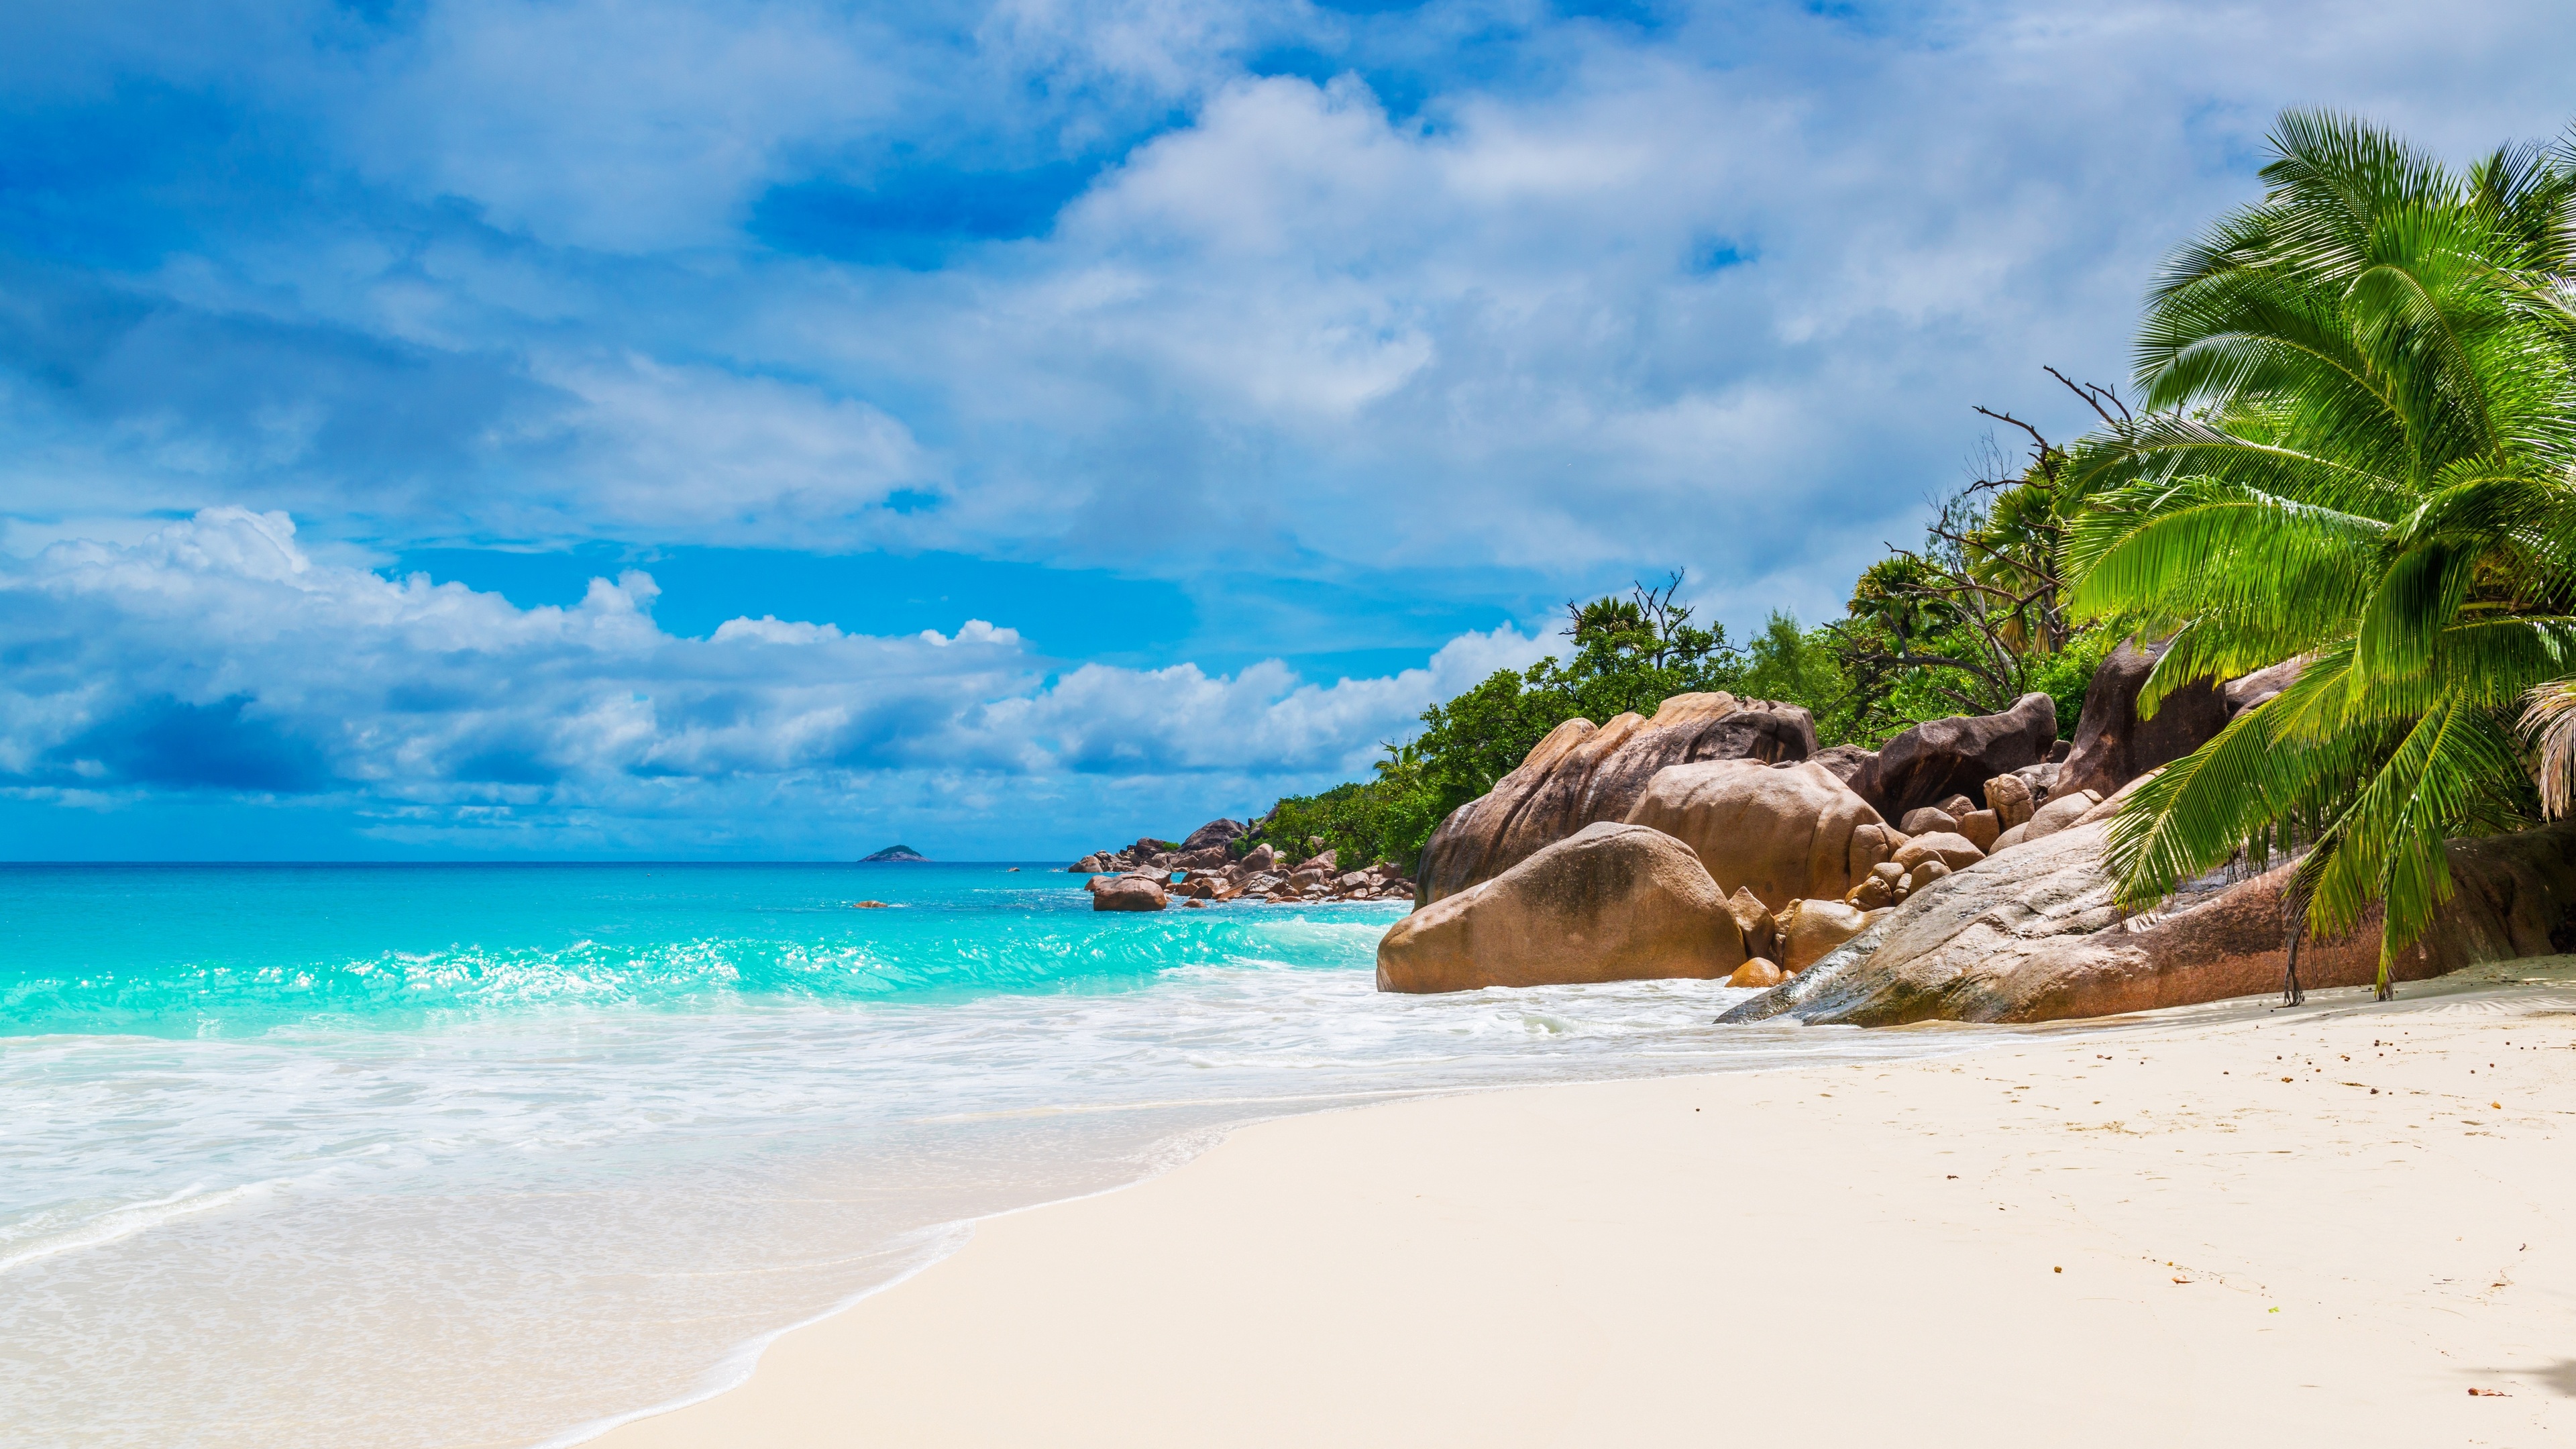 Nature Tropic Island Seychelles Beach Sea Rock Palm Trees Sky Clouds Sand Waves Stones 3840x2160